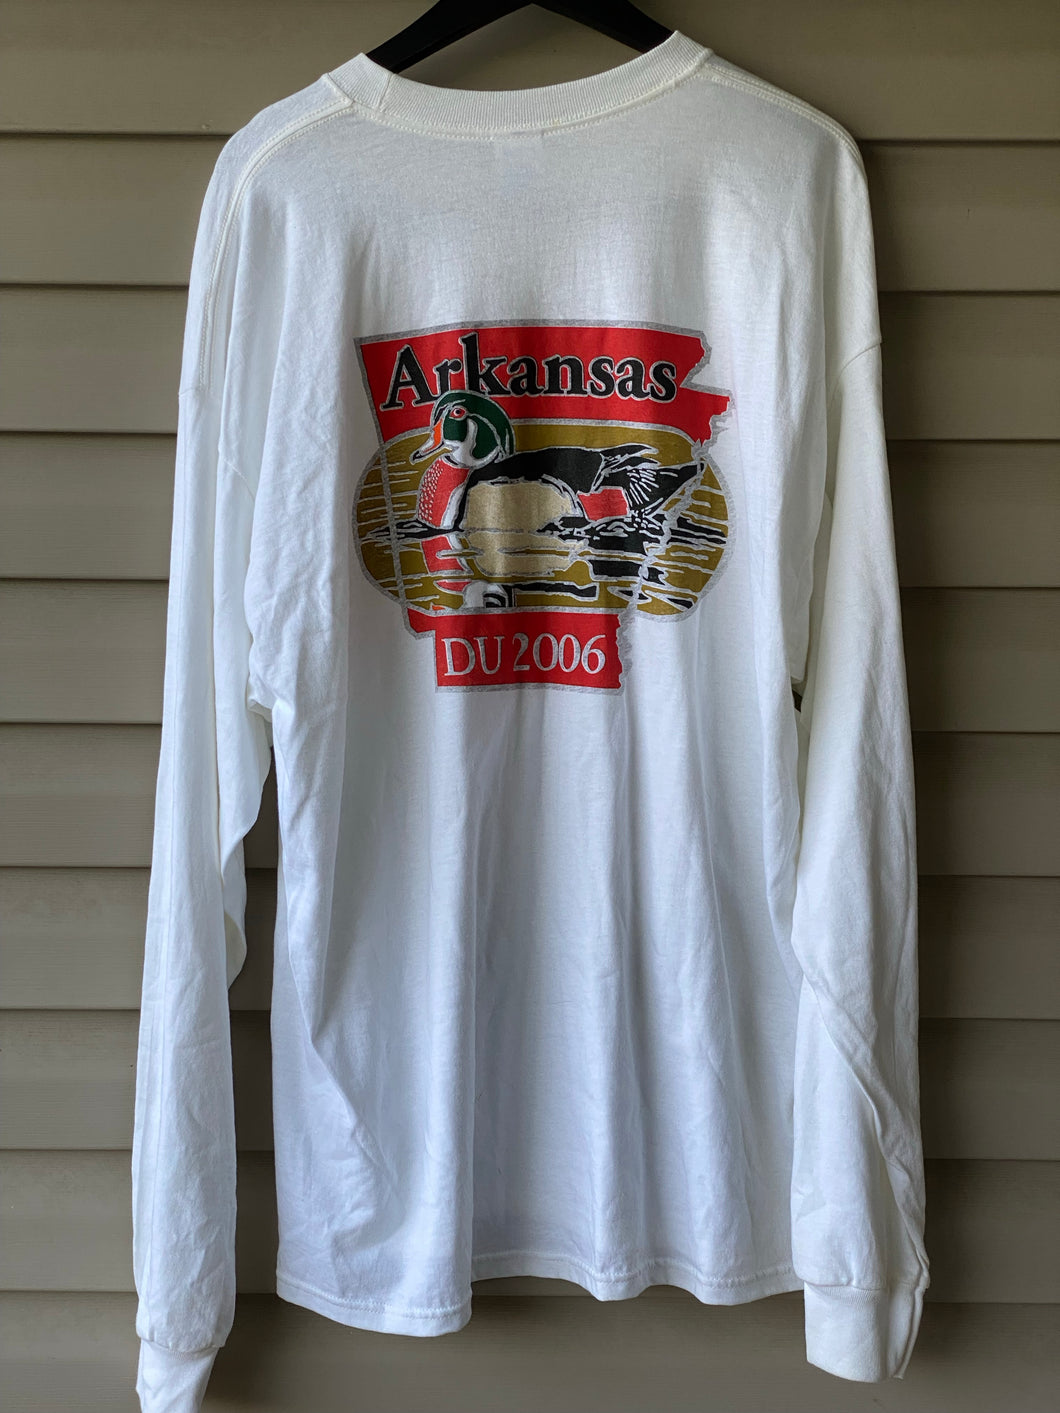 2006 Ducks Unlimited Arkansas Shirt (XXL)